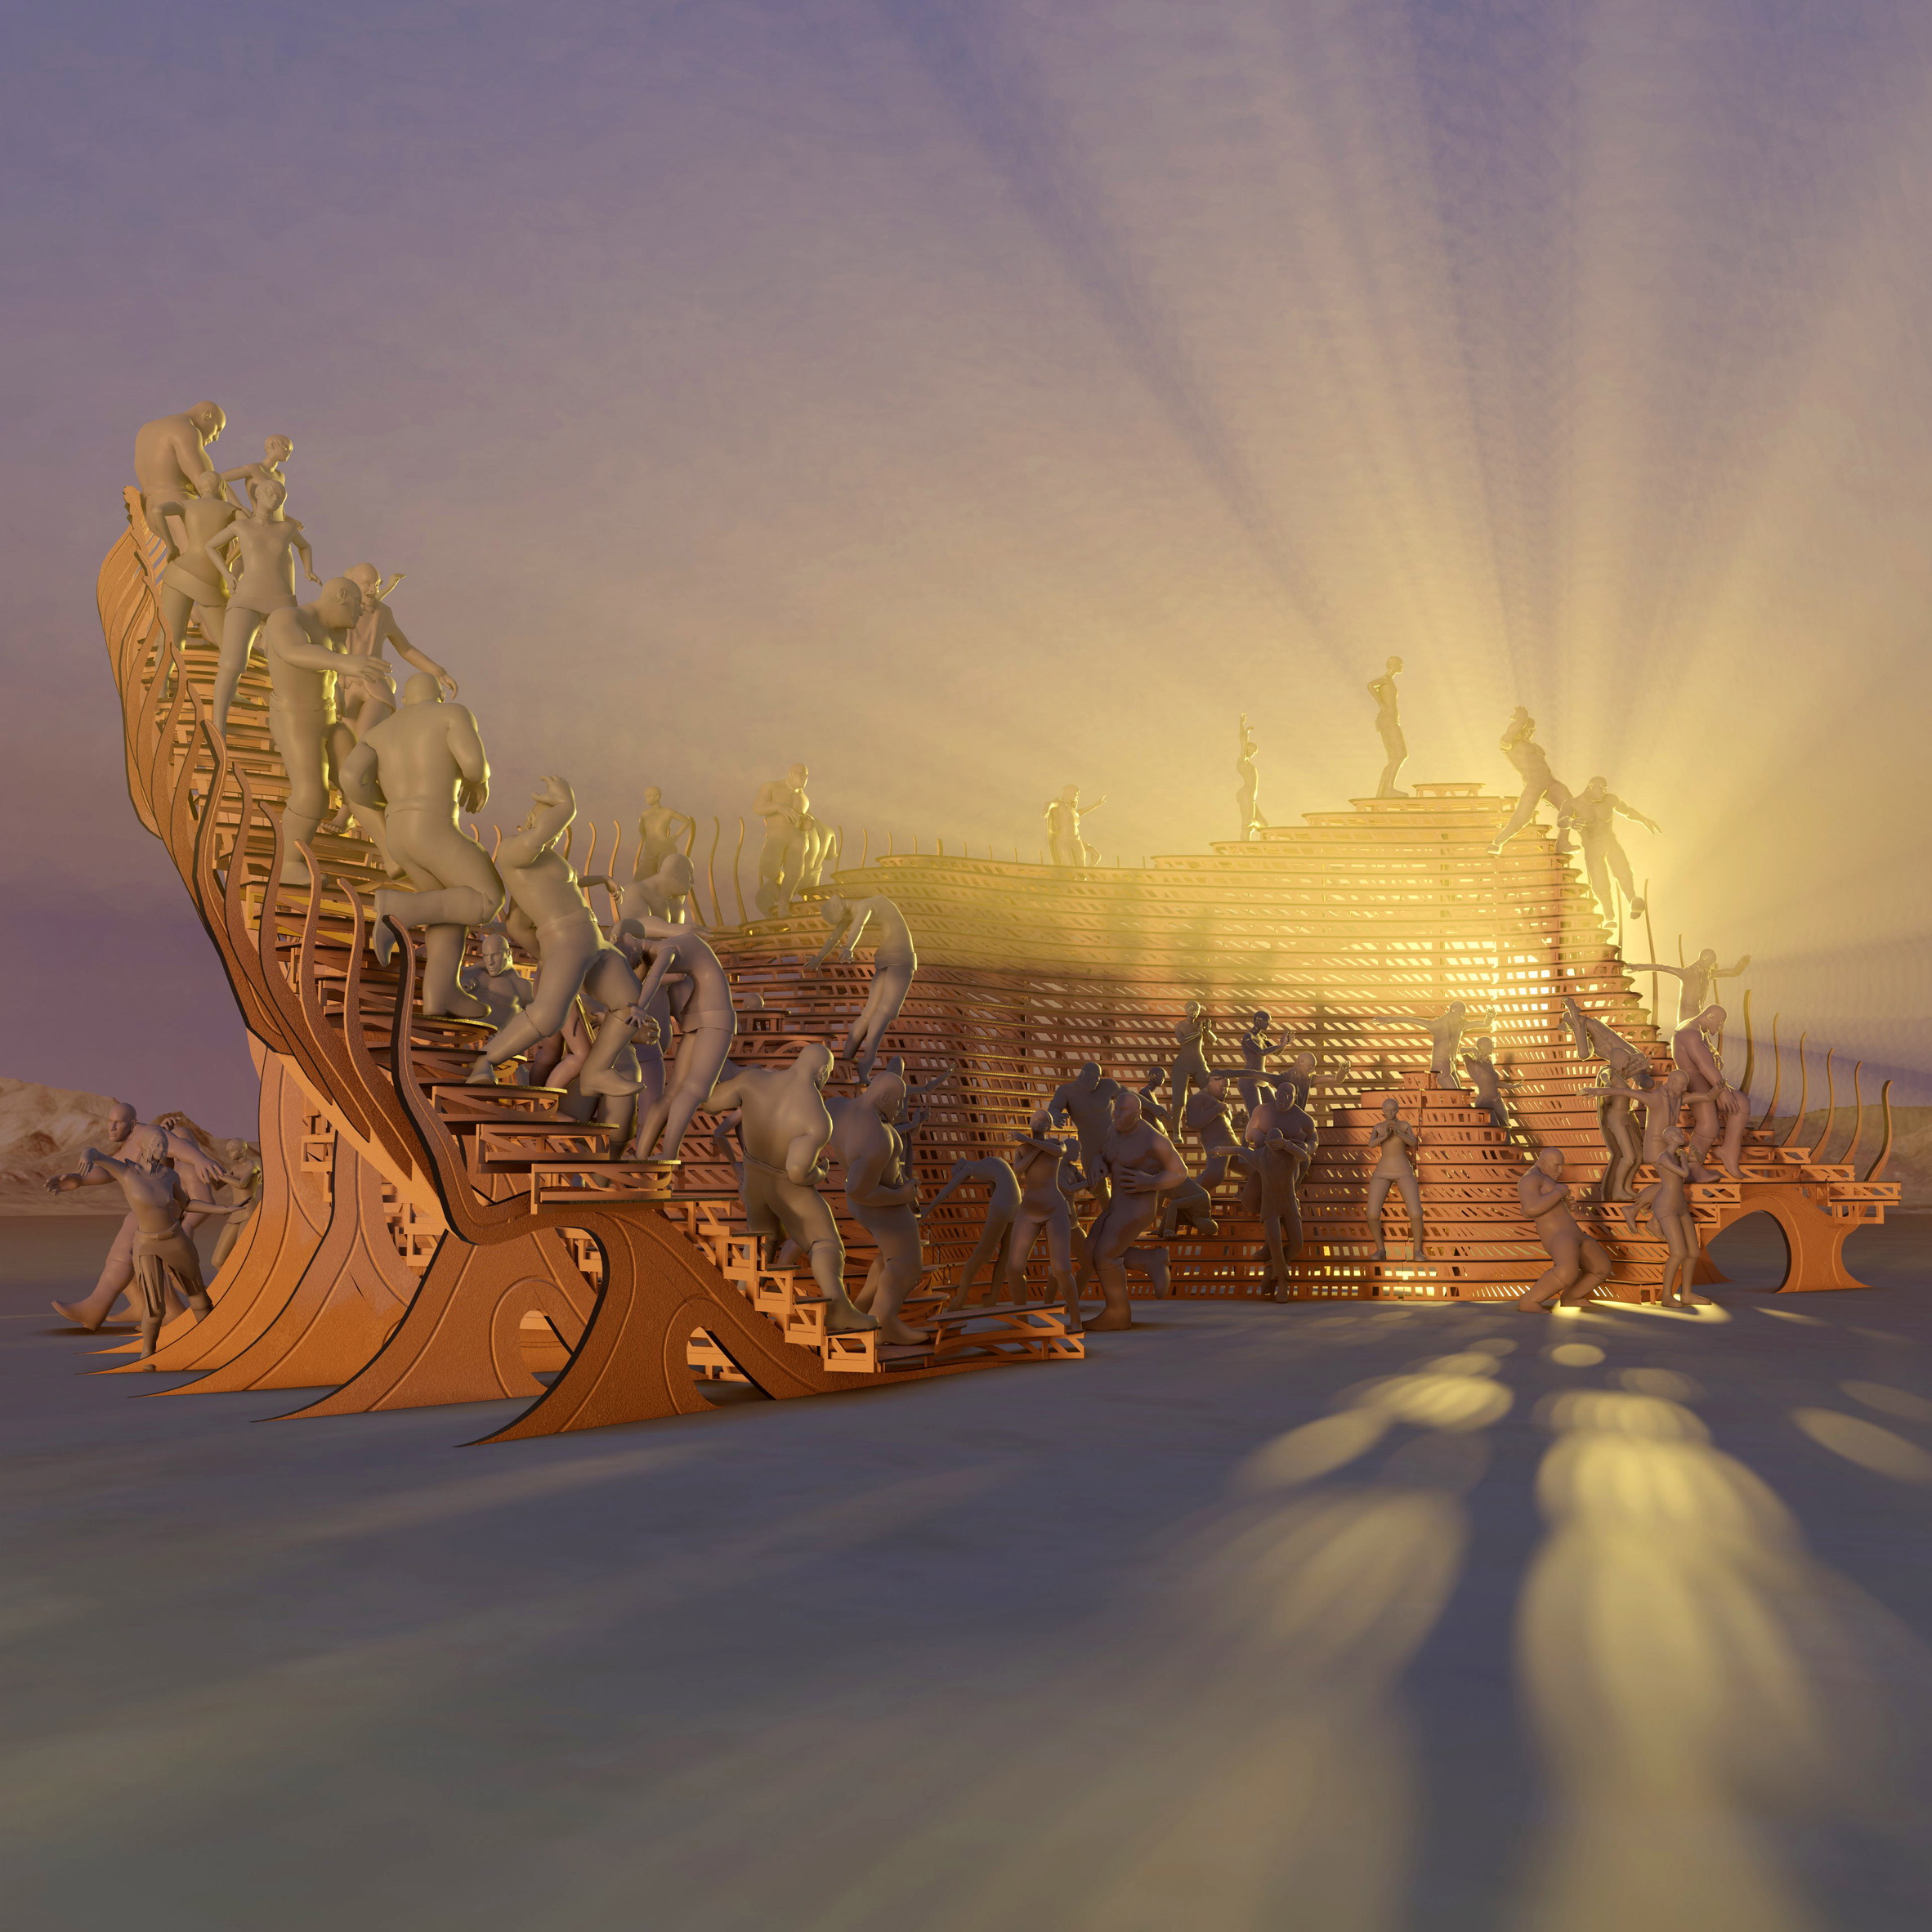 Playascape Burning Man festival pavilion by Atmos Studio